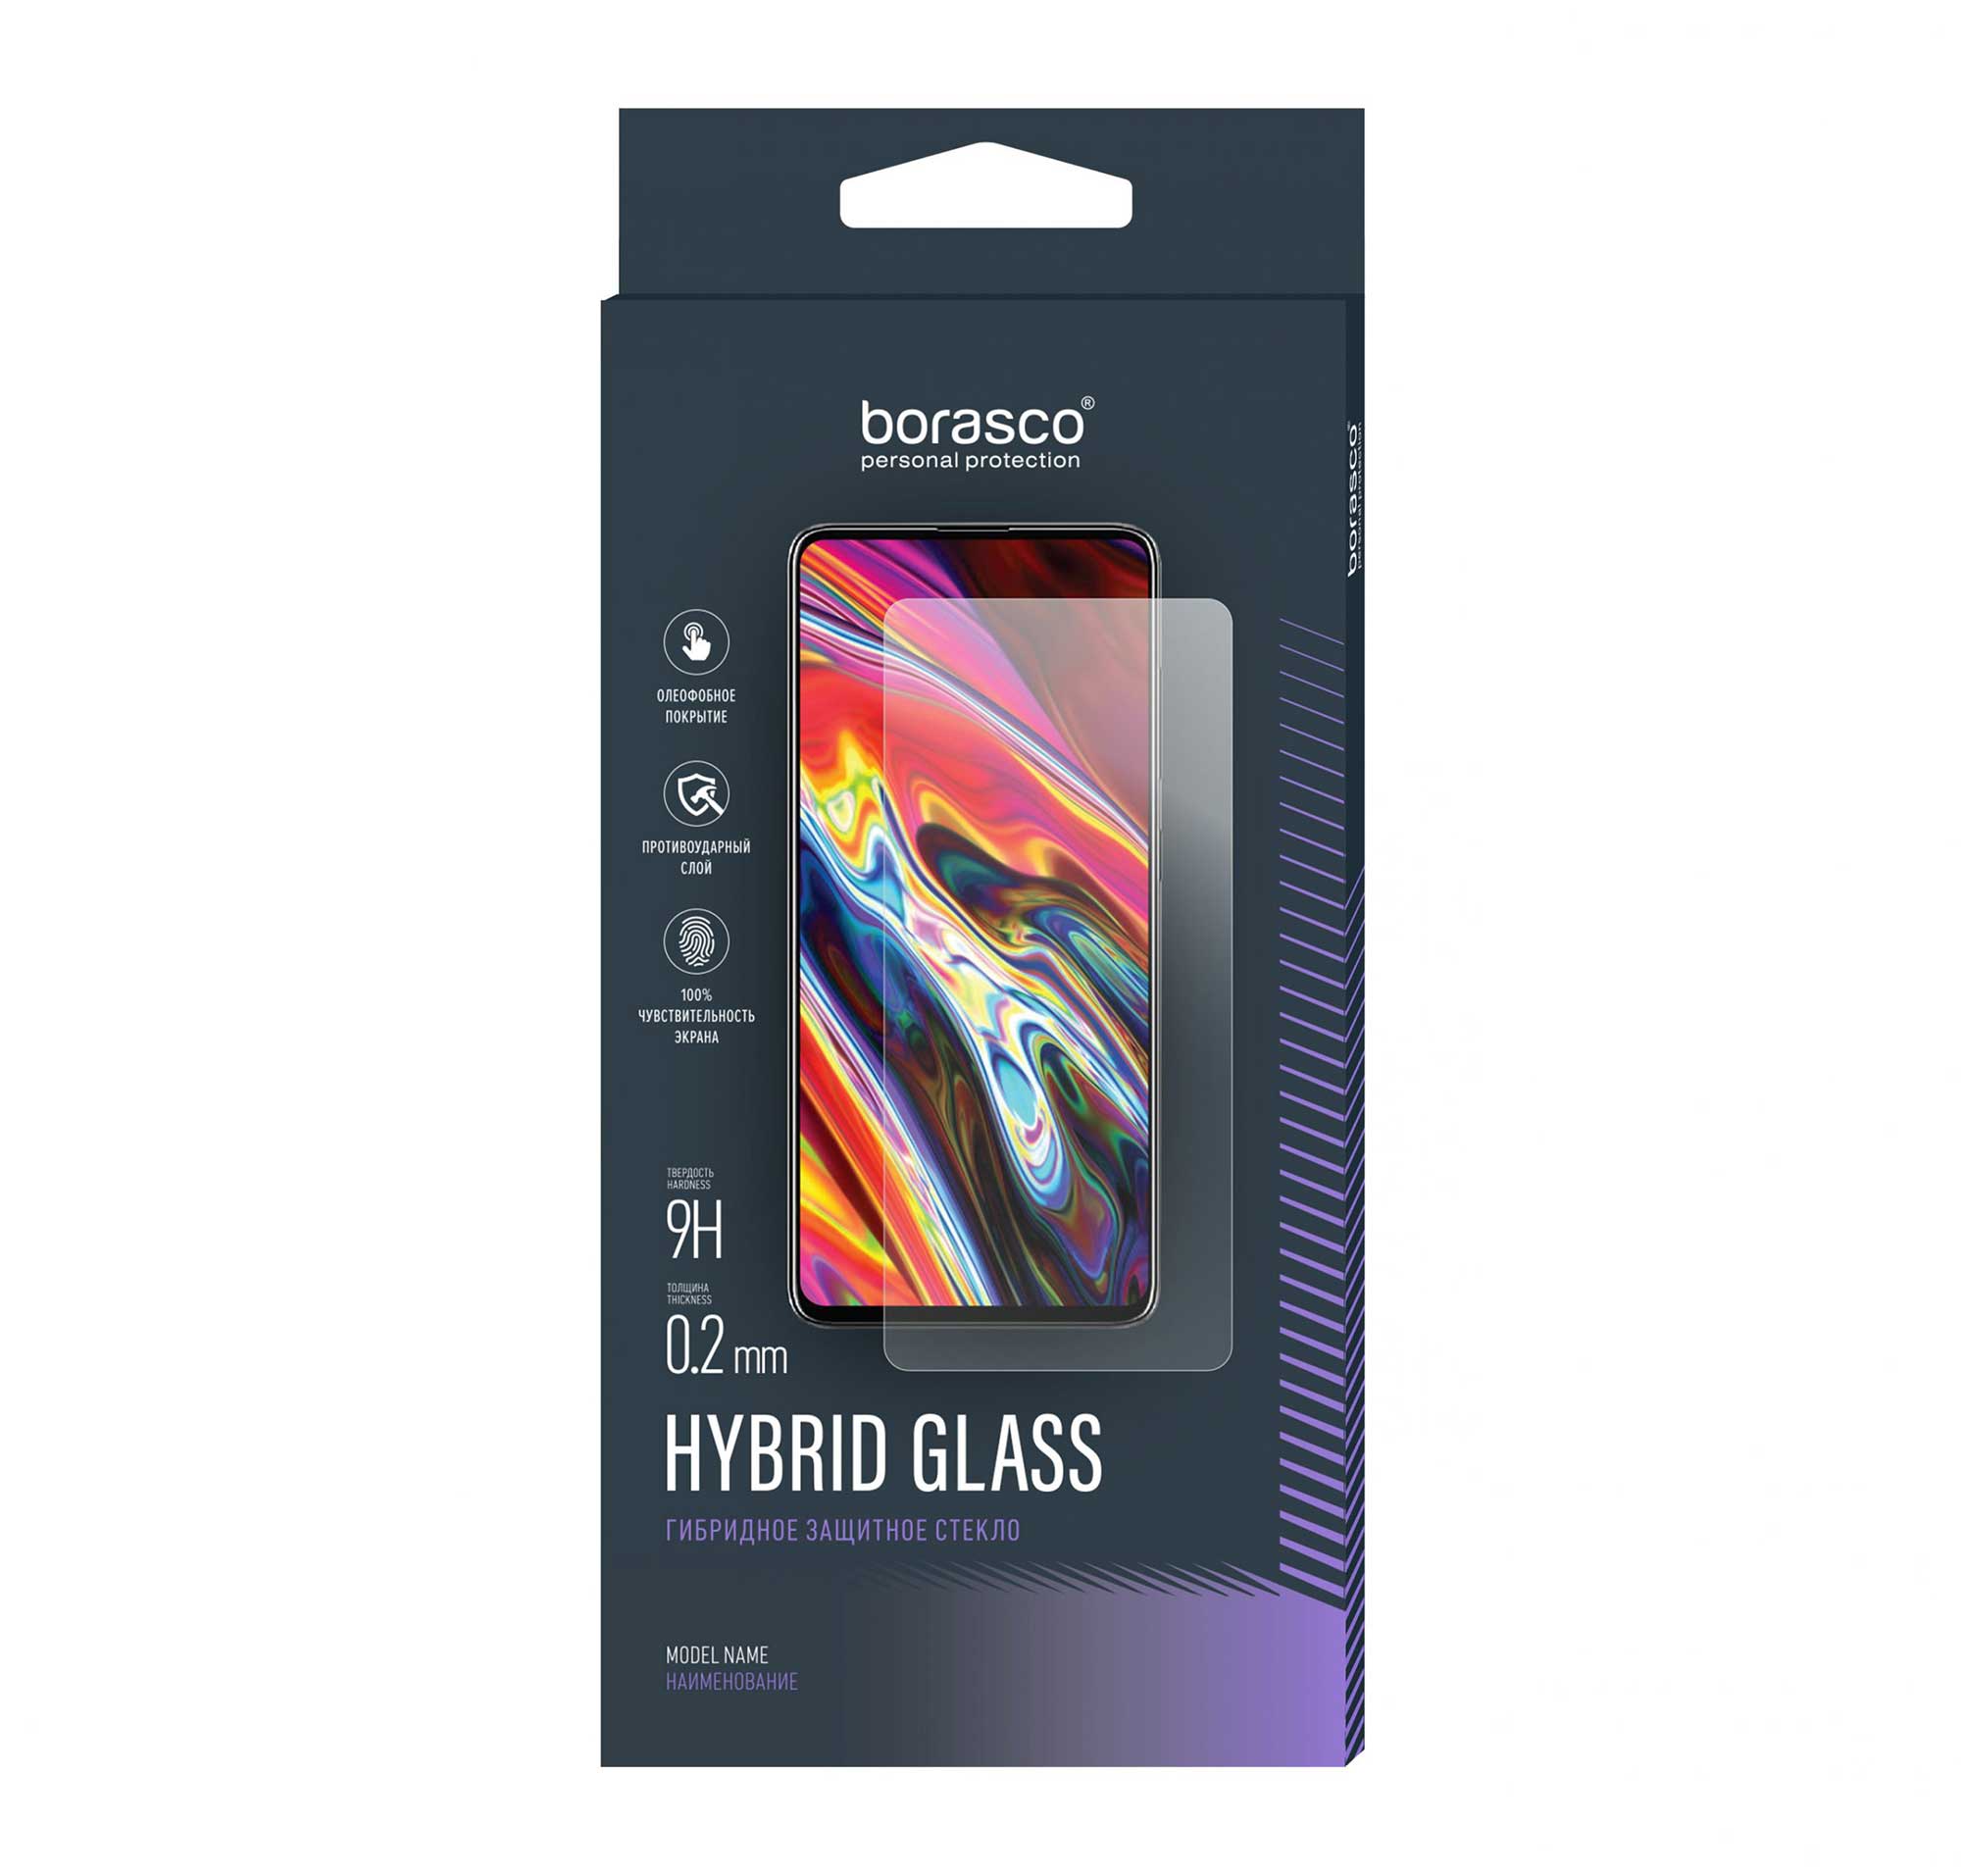 Защитное стекло BoraSCO Hybrid Glass для ZTE Blade A71 стекло защитное zte blade a71 прозрачное